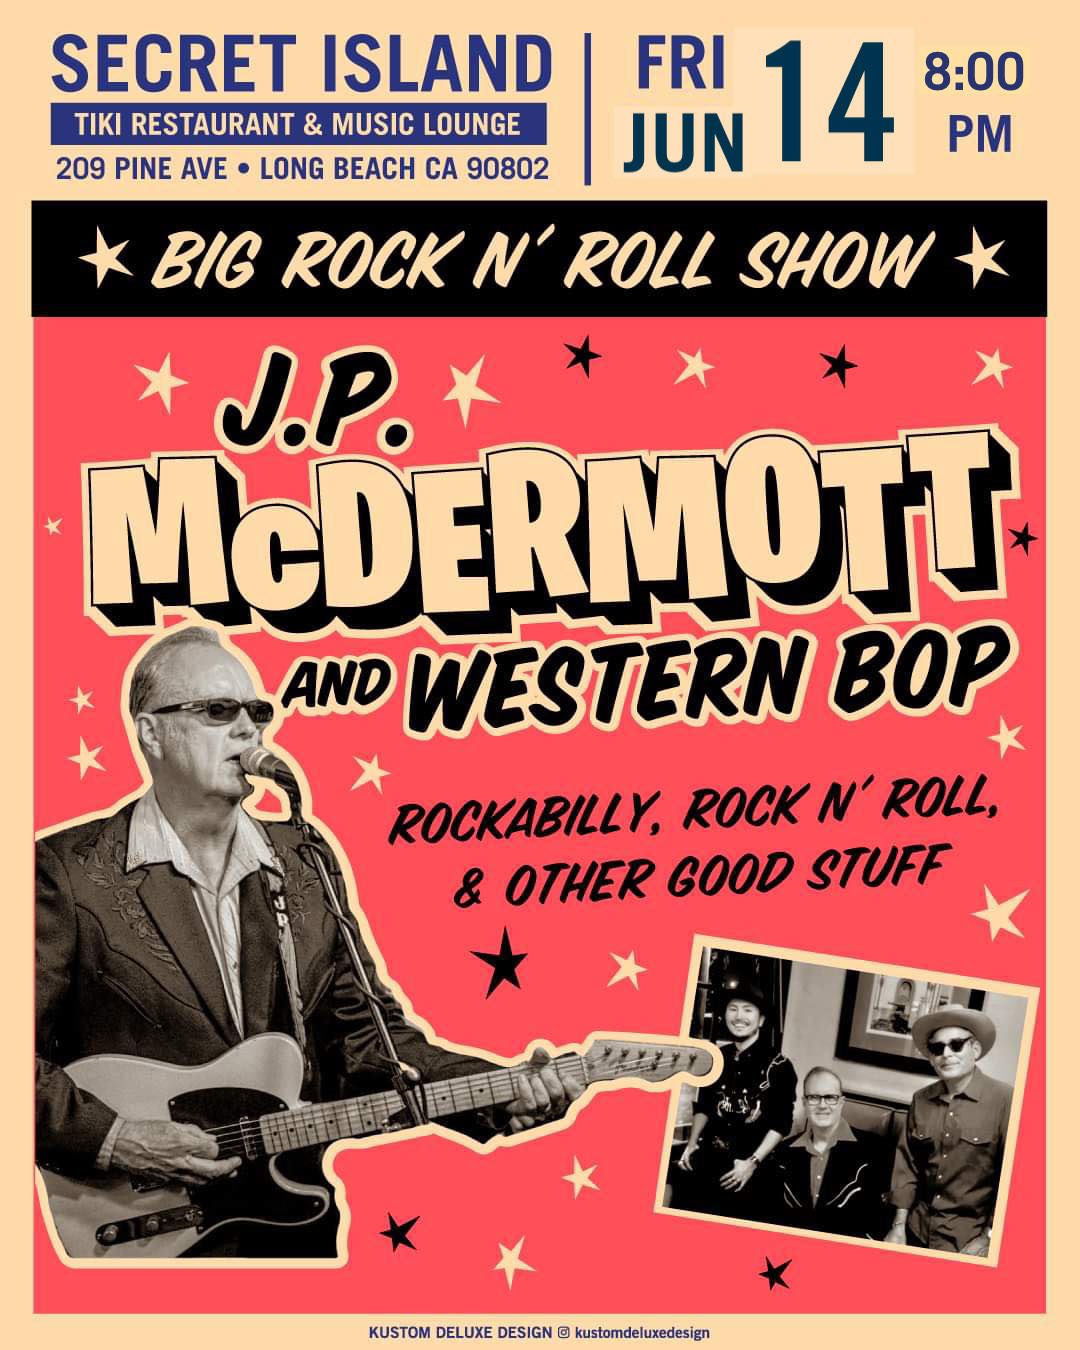 Rockabilly Tiki with JP McDermott!